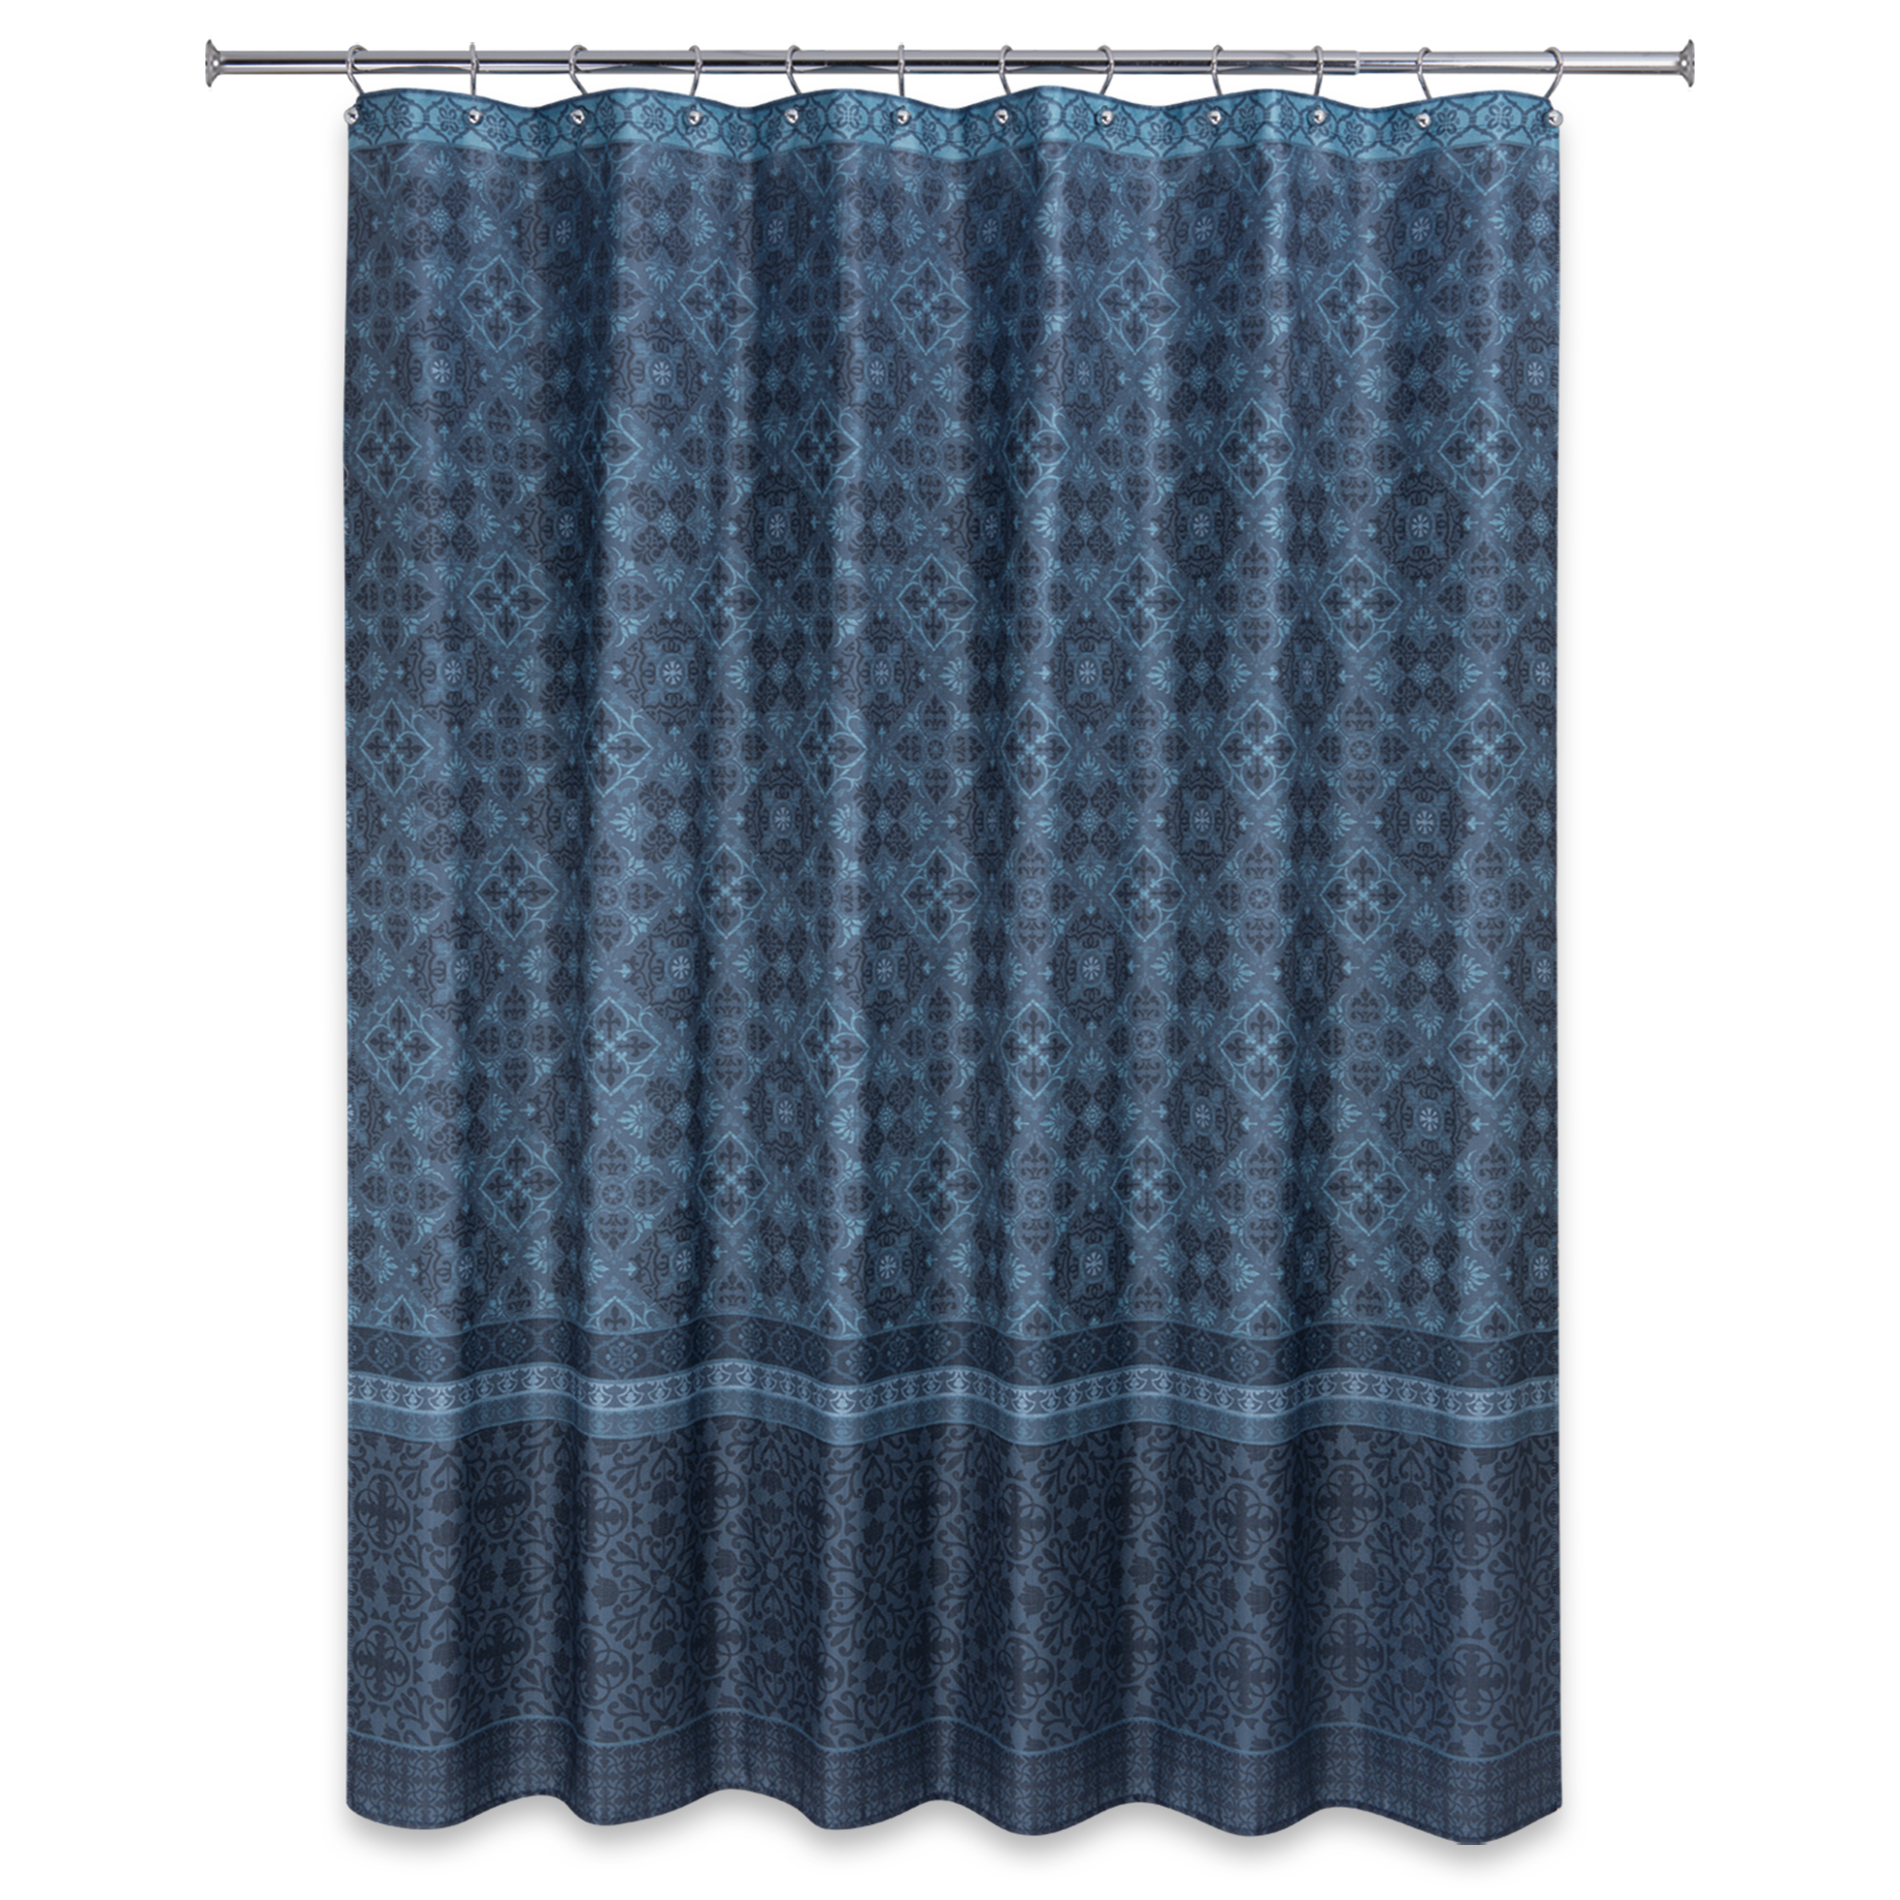 Essential Home 70" W x 72" L Shower Curtain - Indigo